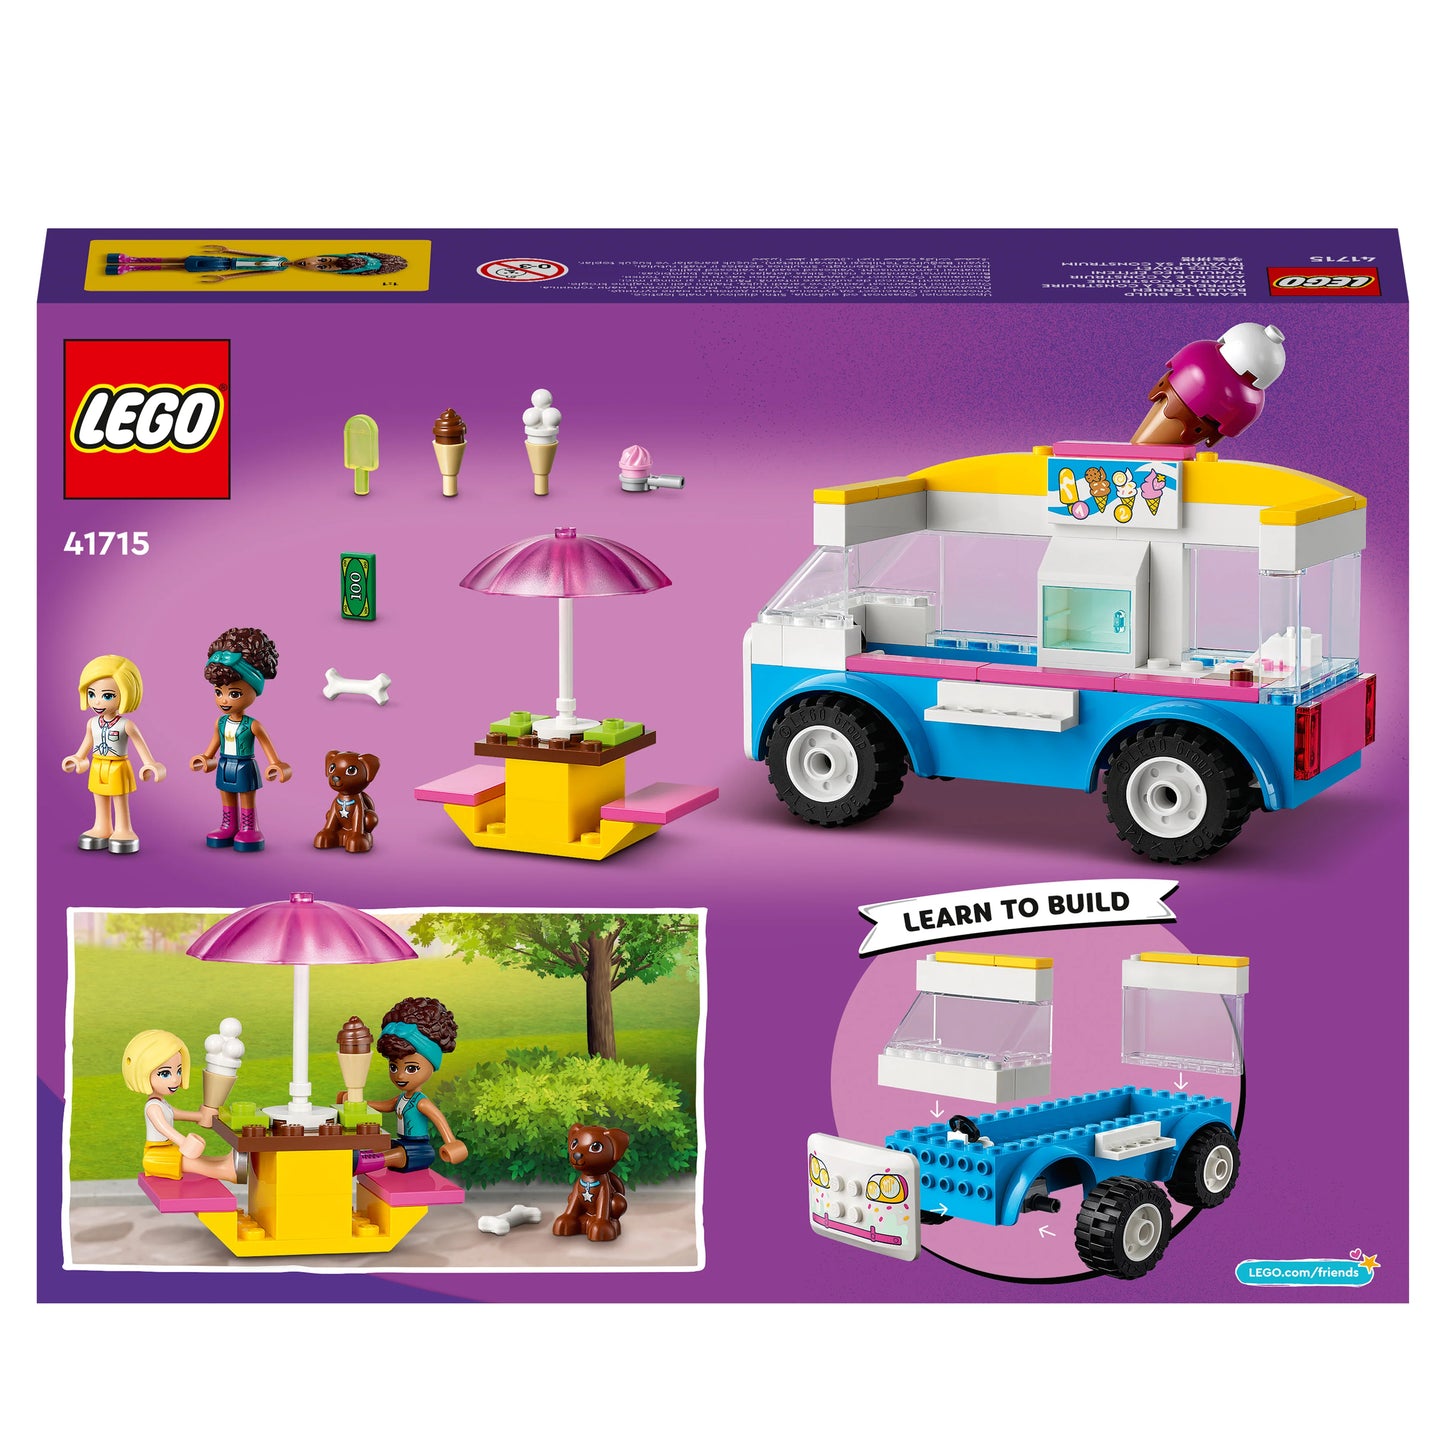 Ice Cream Truck - LEGO Friends